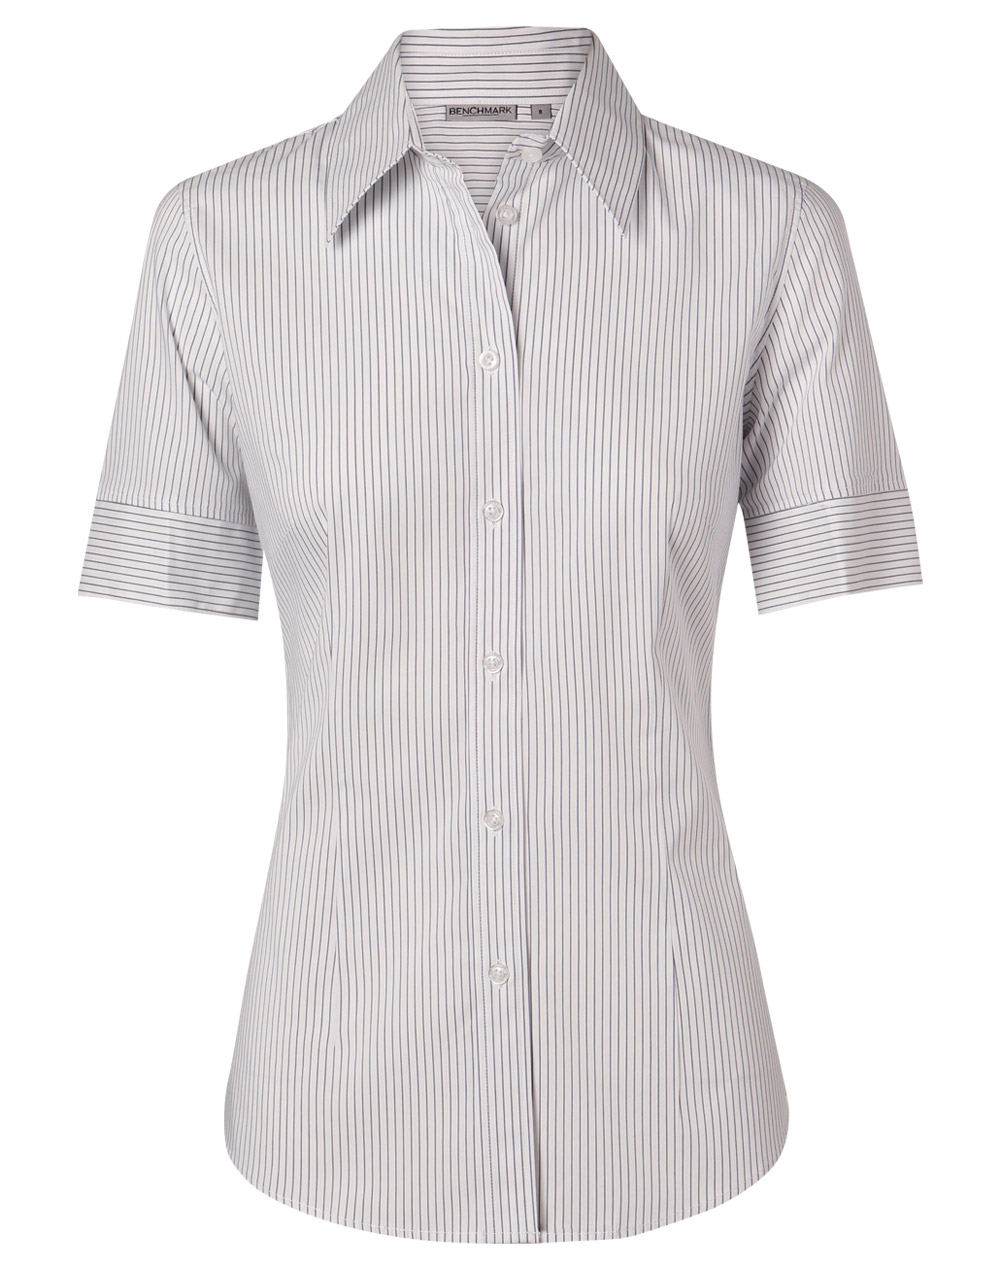 M8200S/M8200/M8200L Women’s Ticking Stripe Short Sleeve Shirt